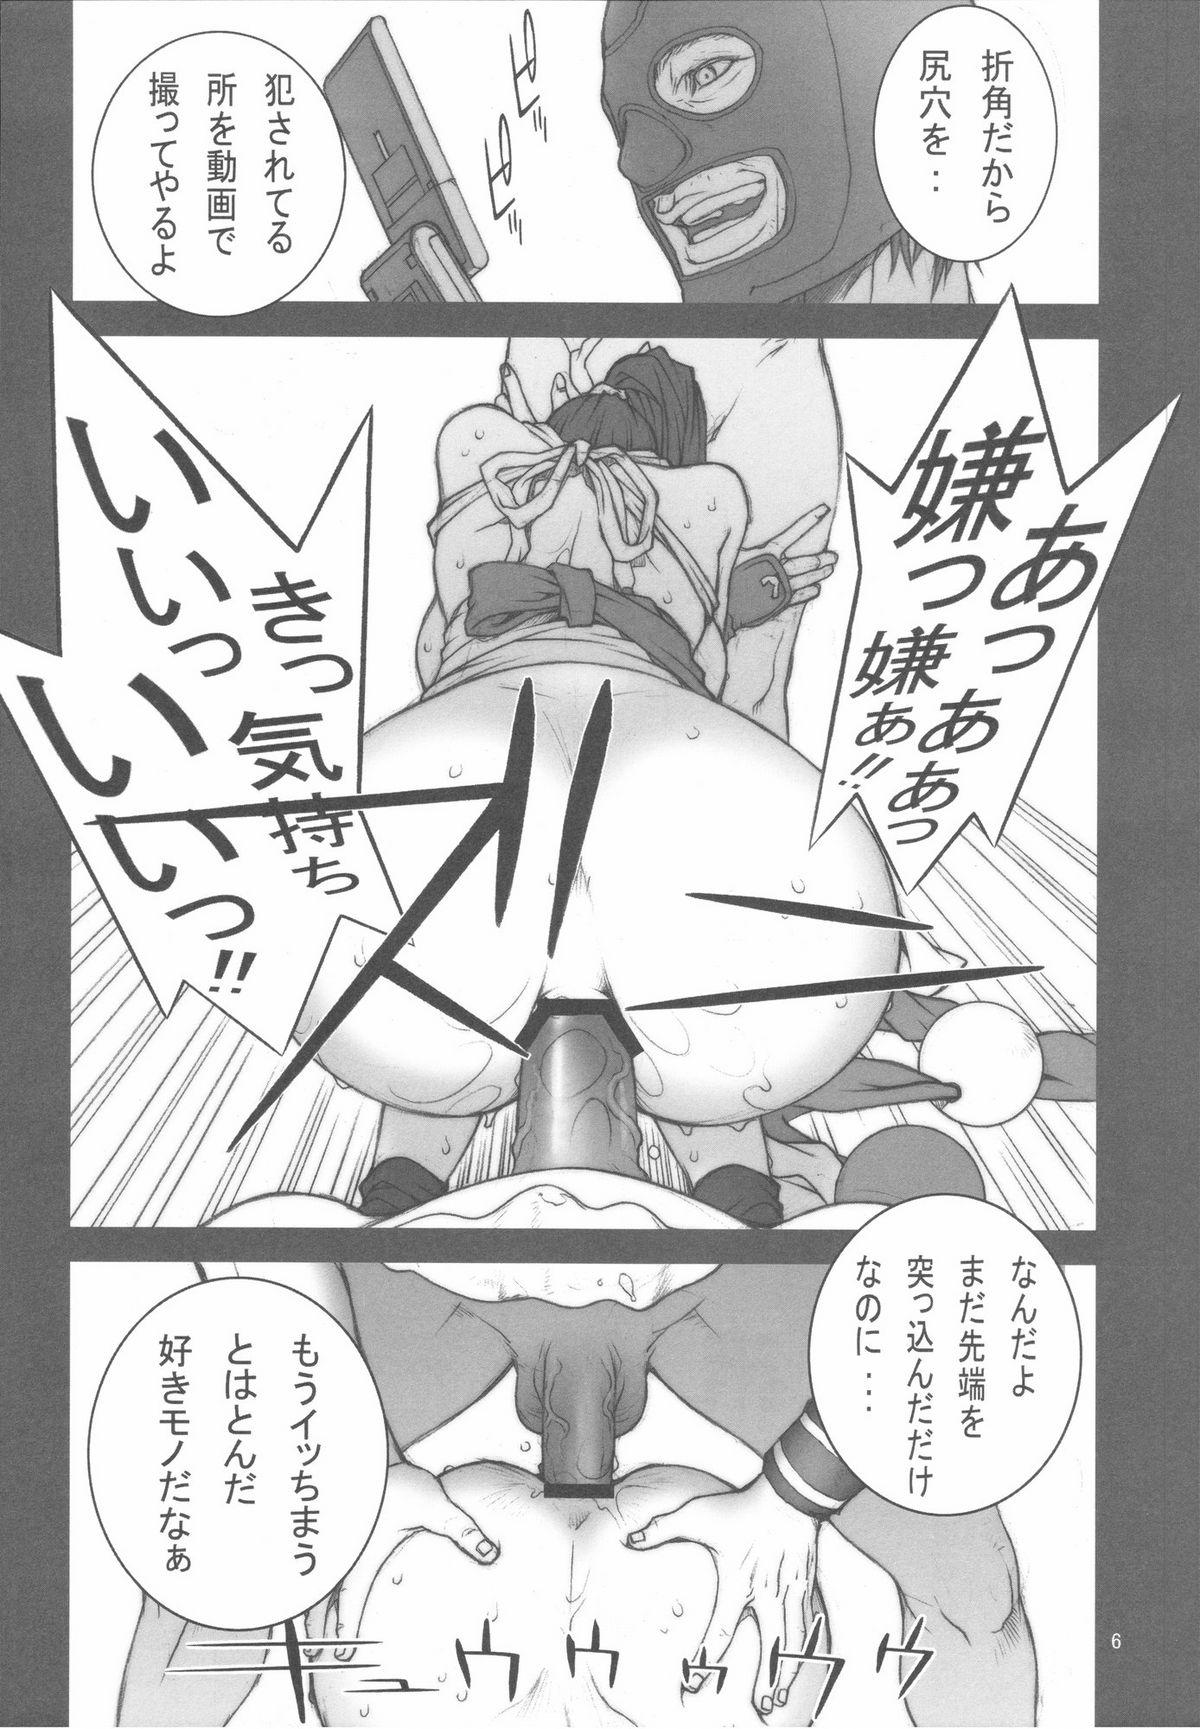 Kashima KAKUTOU-GAME BON - King of fighters Fatal fury Dance - Page 7